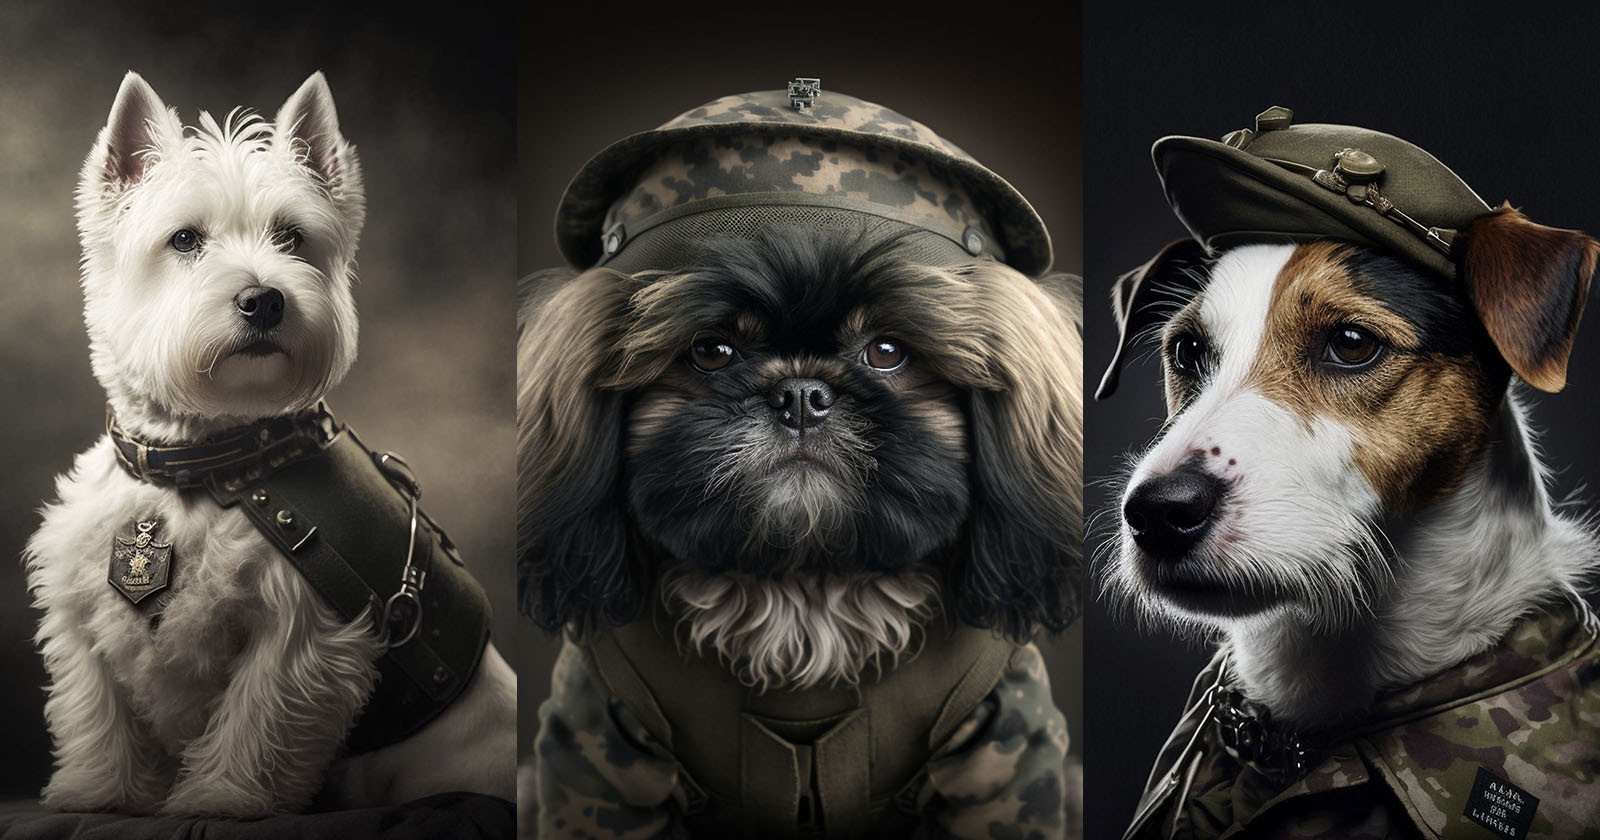  photographer uses create incredibly realistic dog portraits 